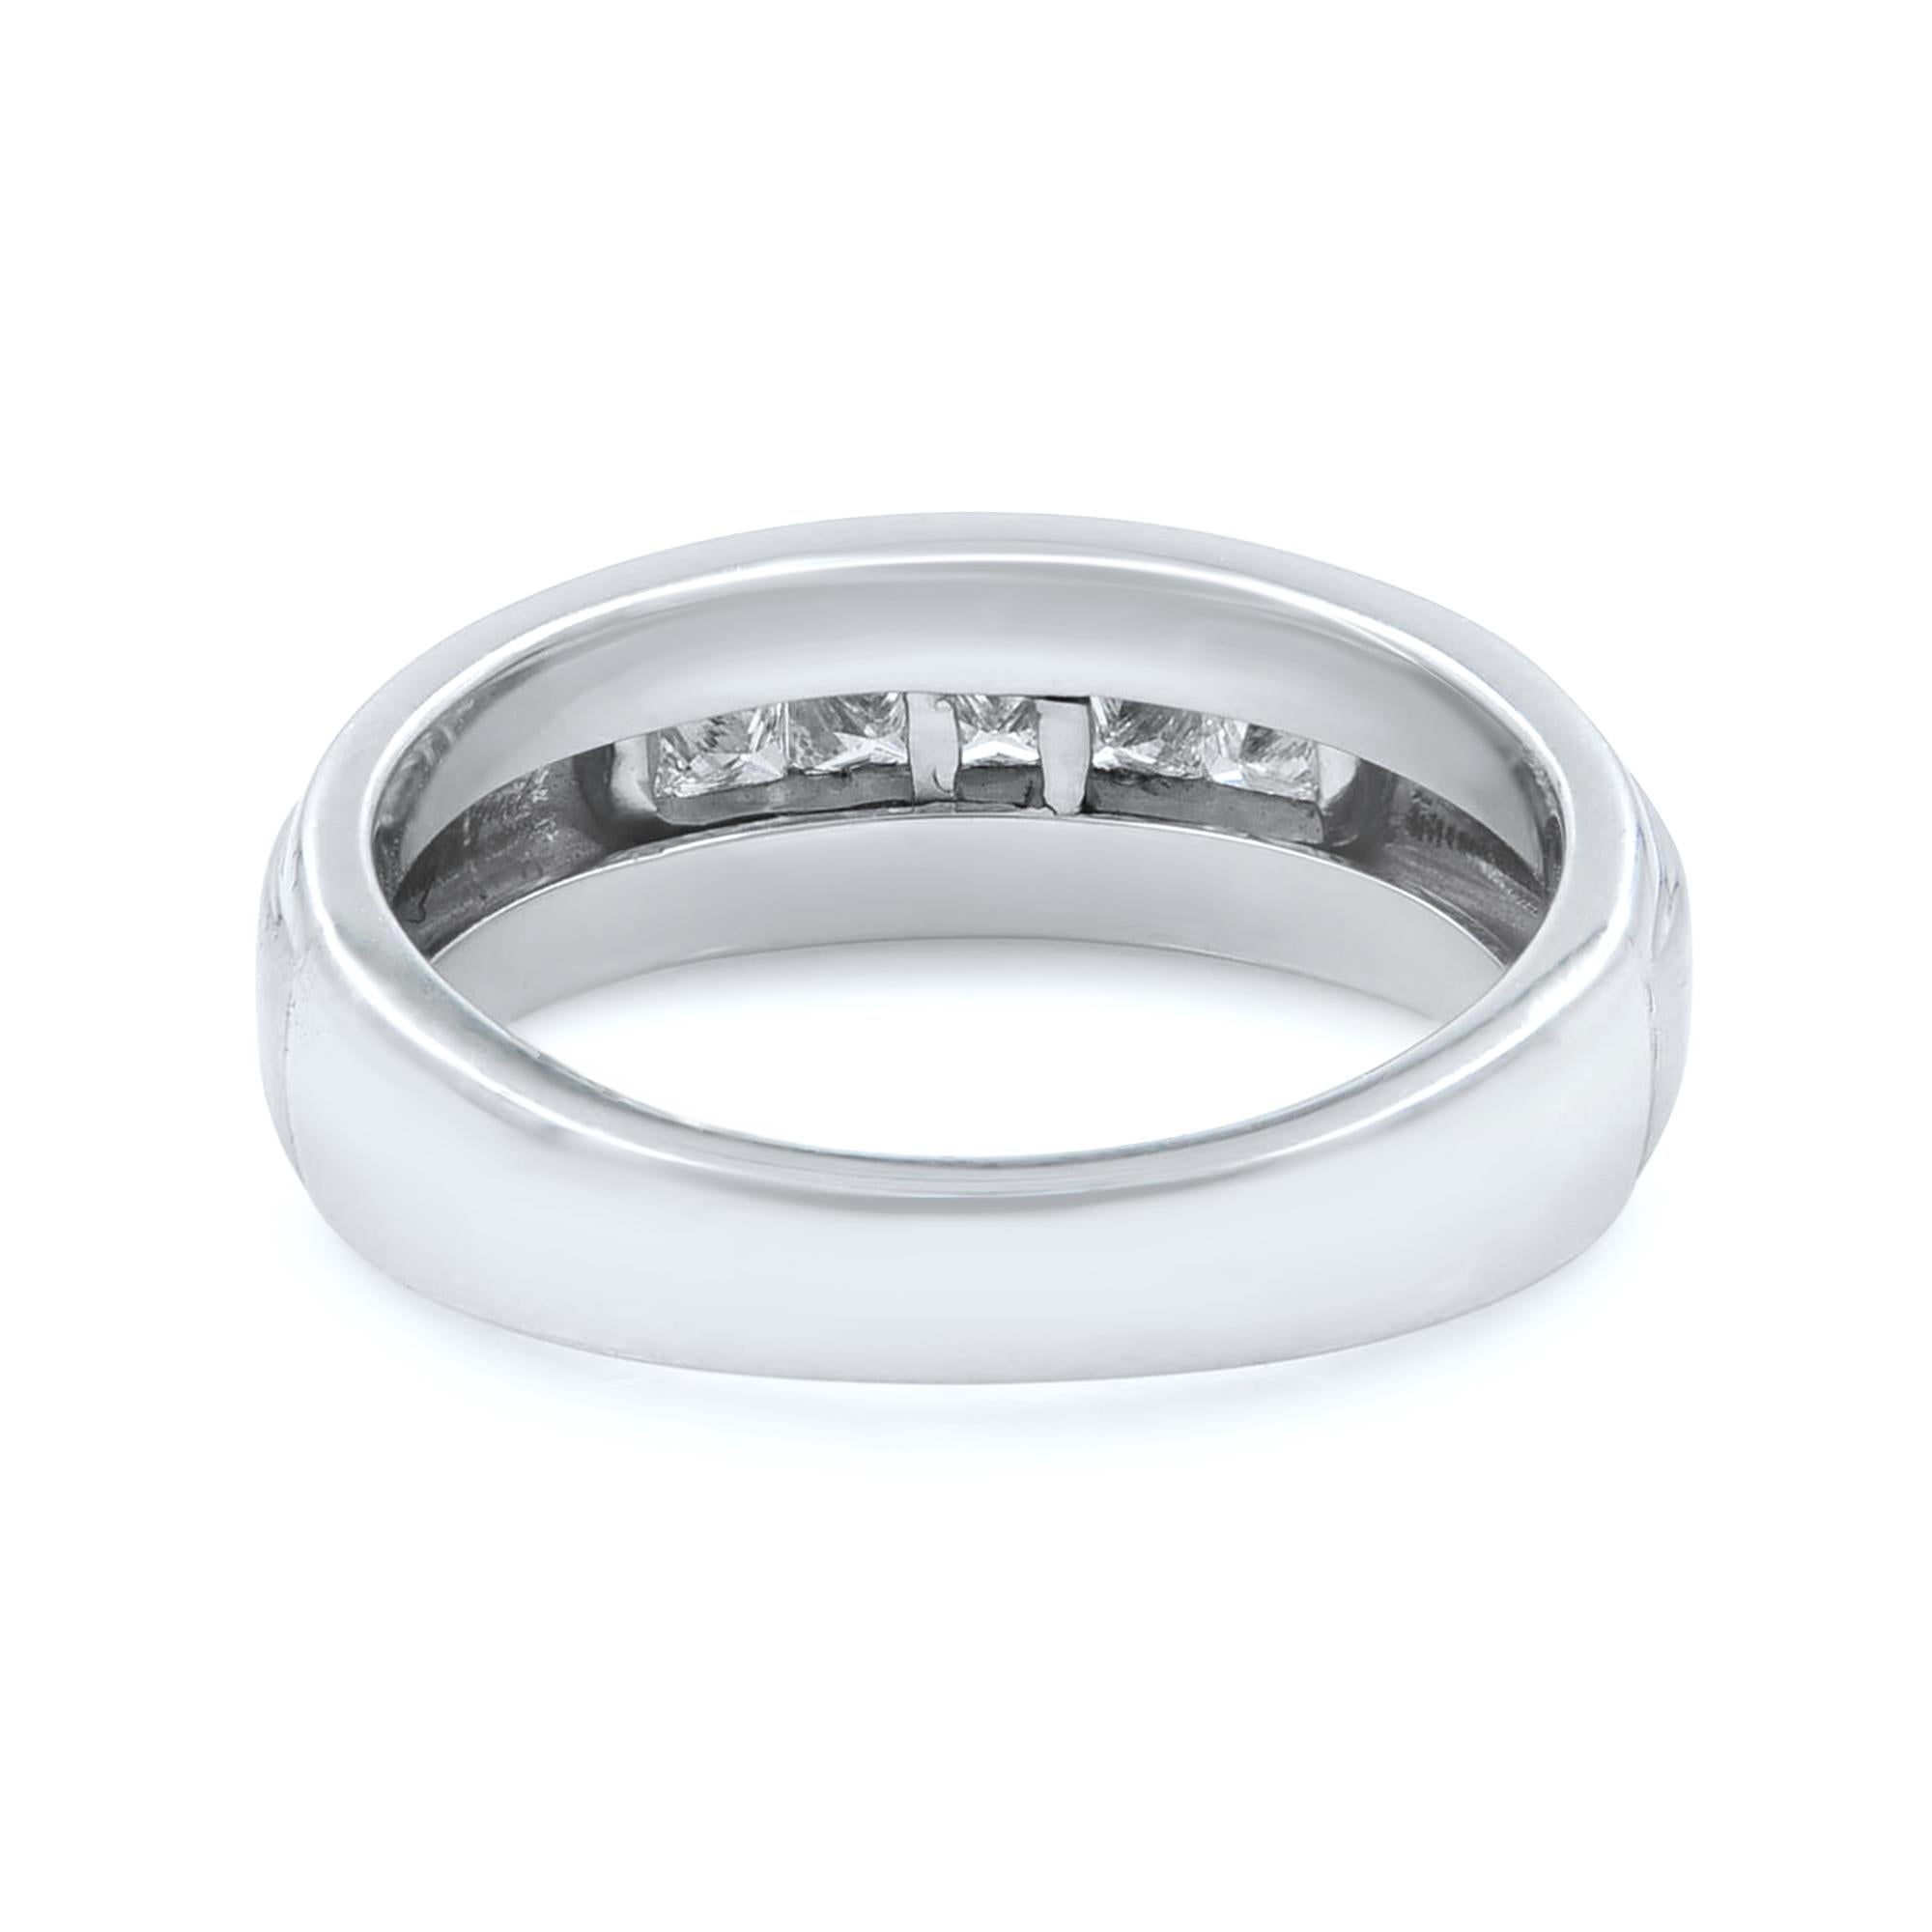 Modern Princess Cut Mens Diamond Wedding Band Ring 10k White Gold 0.40 Cttw Size 10